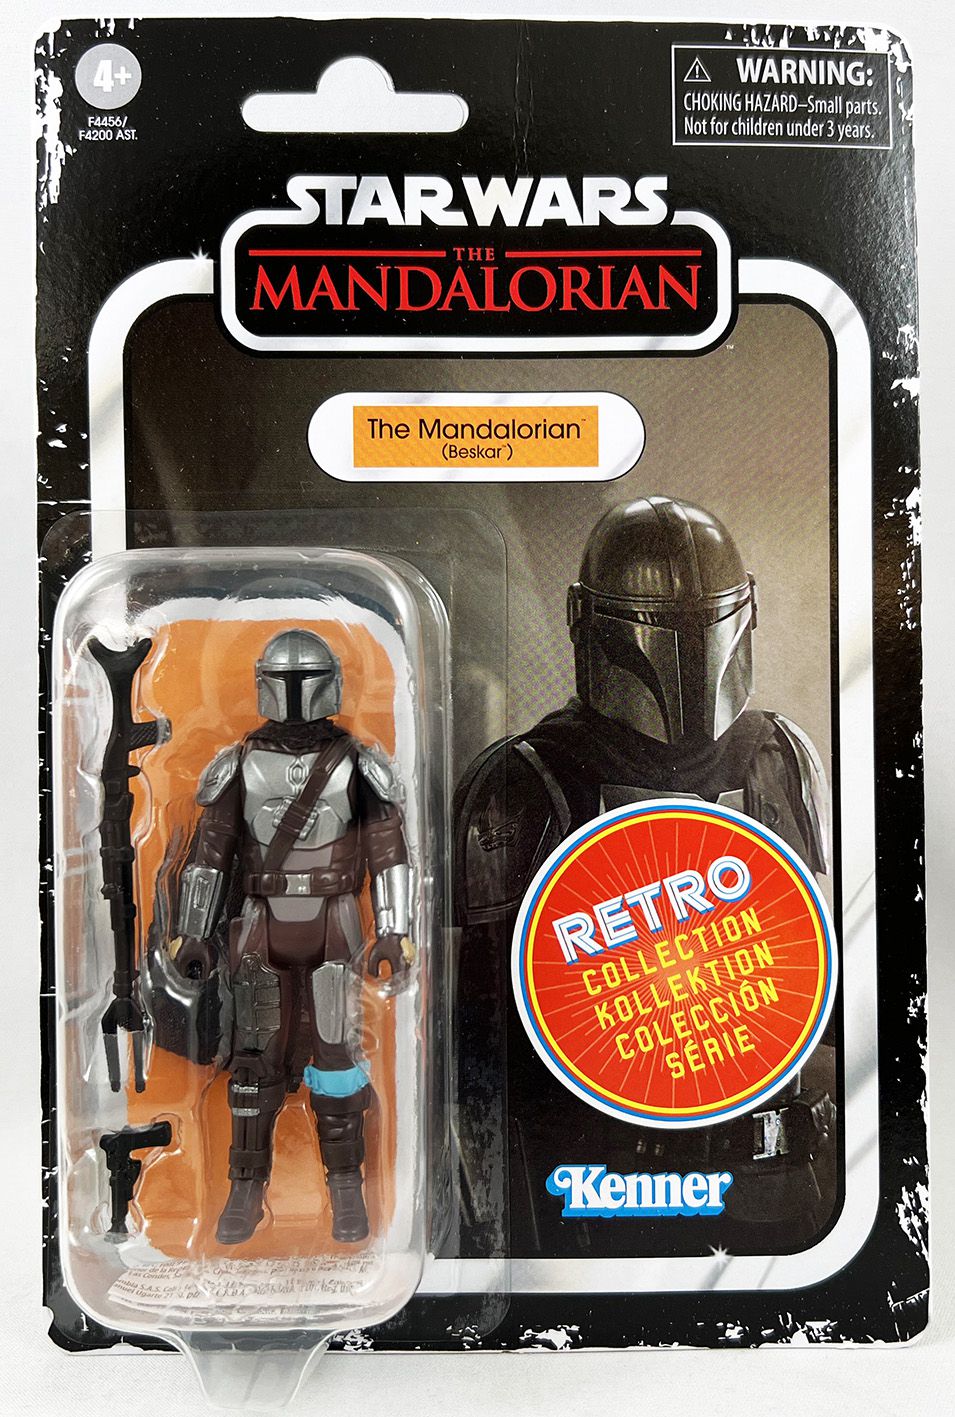 HASBRO KENNER the Retro Collection Star Wars The Mandalorian Mandalorian 